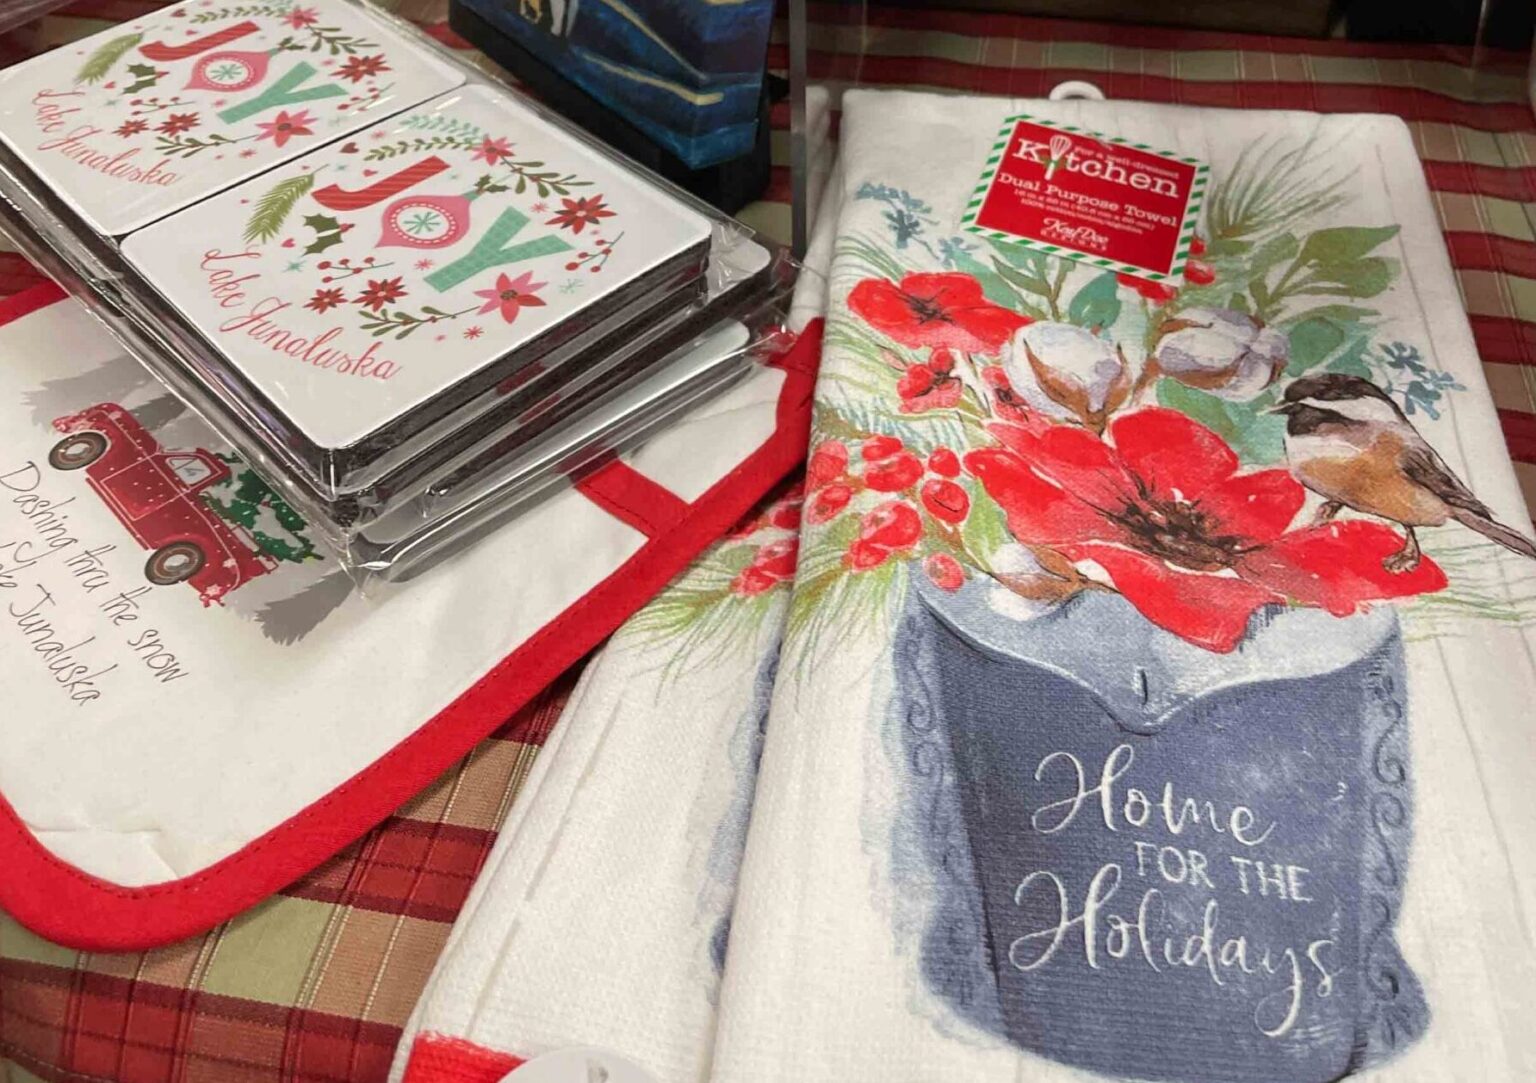 Junaluska Gifts & Grounds Home for the Holidays towel and Christmas items